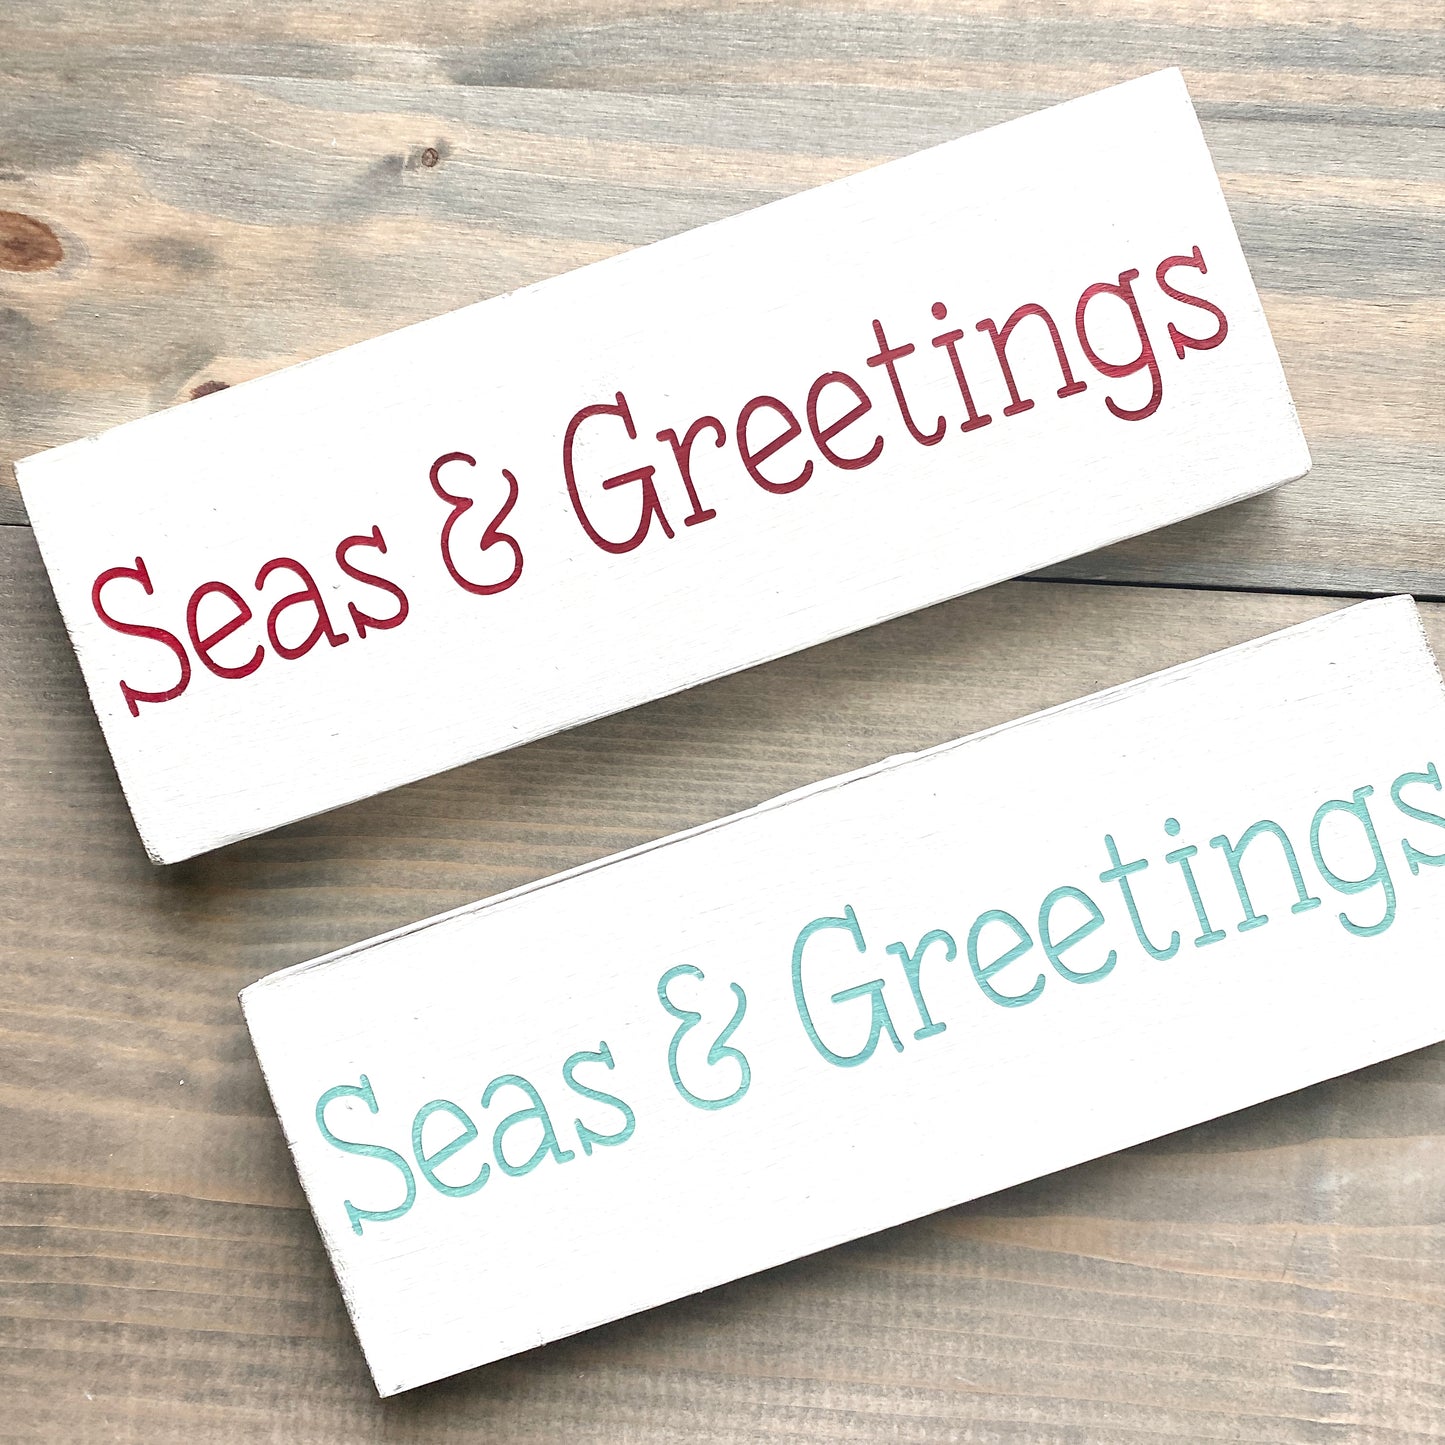 Seas & Greetings Sign